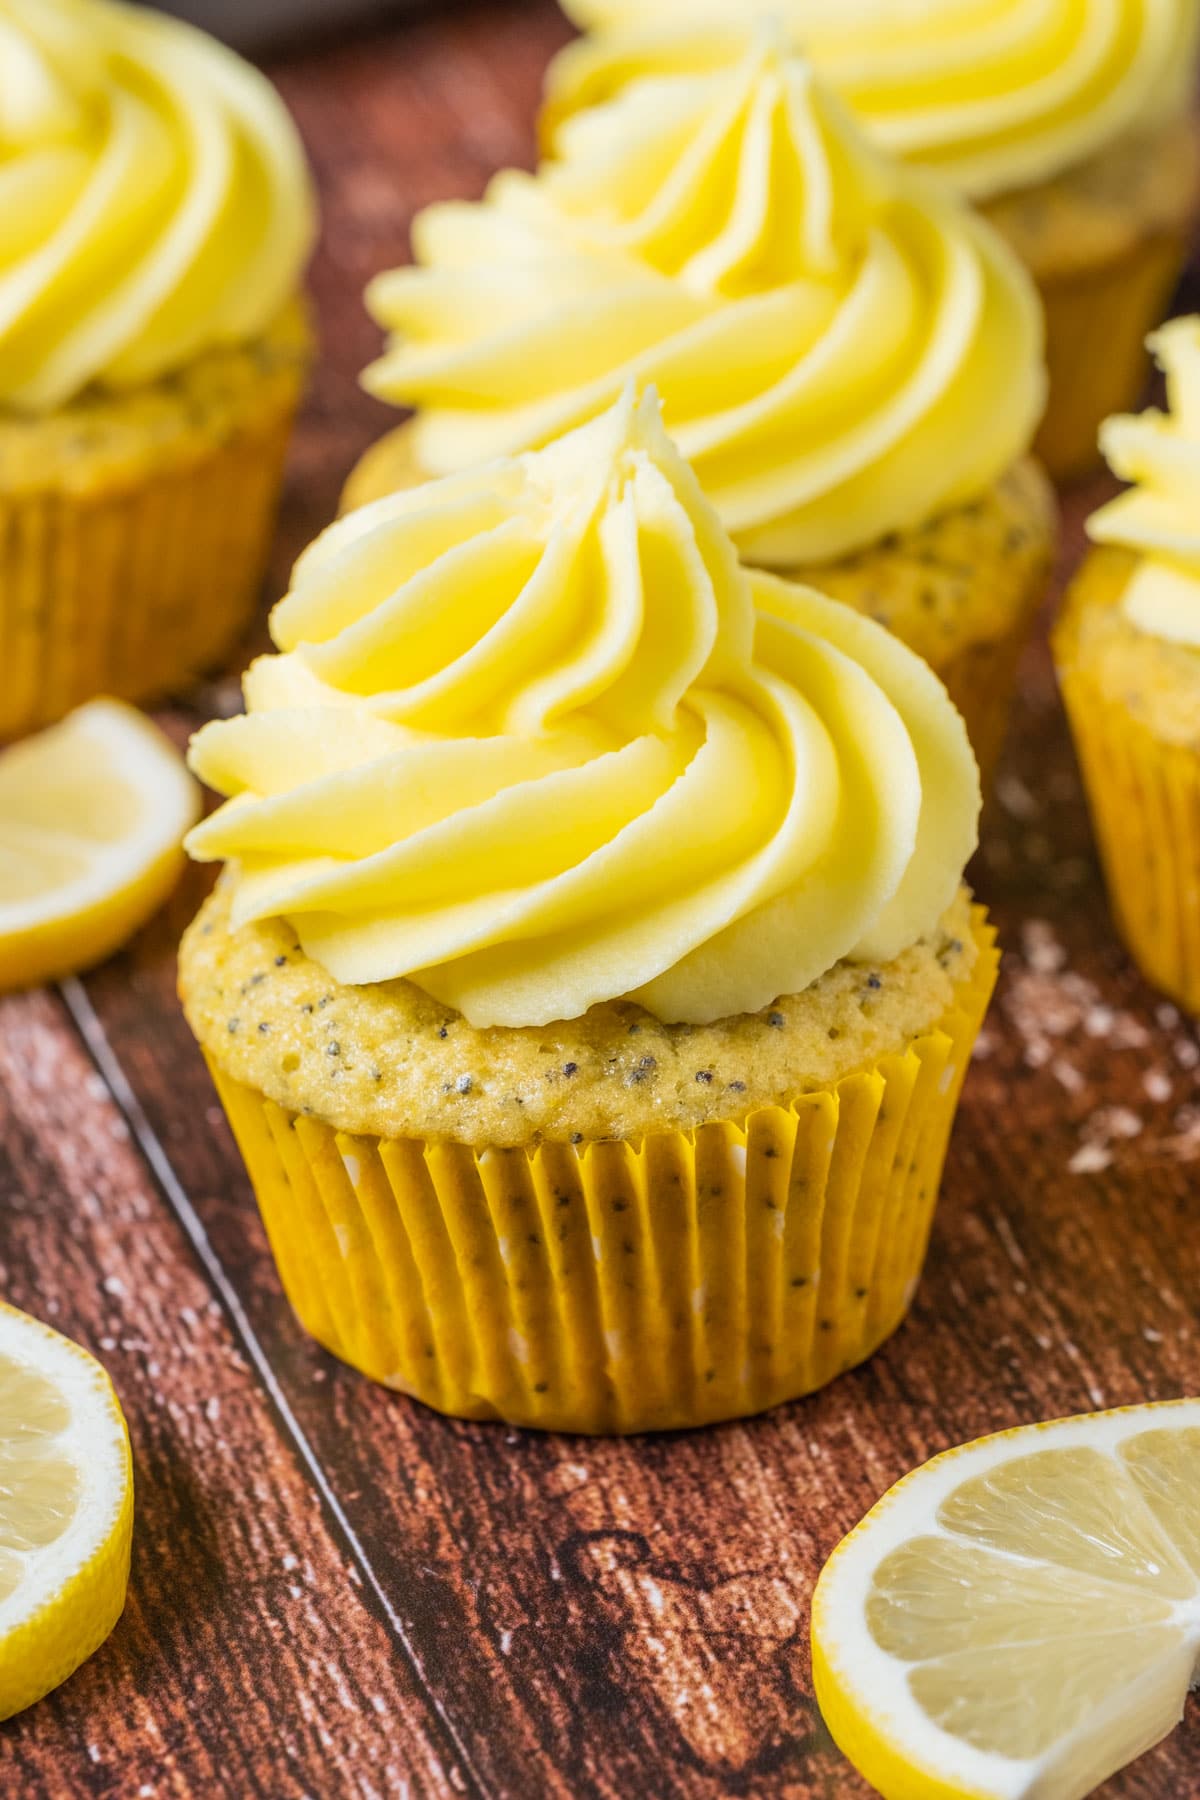 Lemon poppy seed cupcakes and lemon slices.